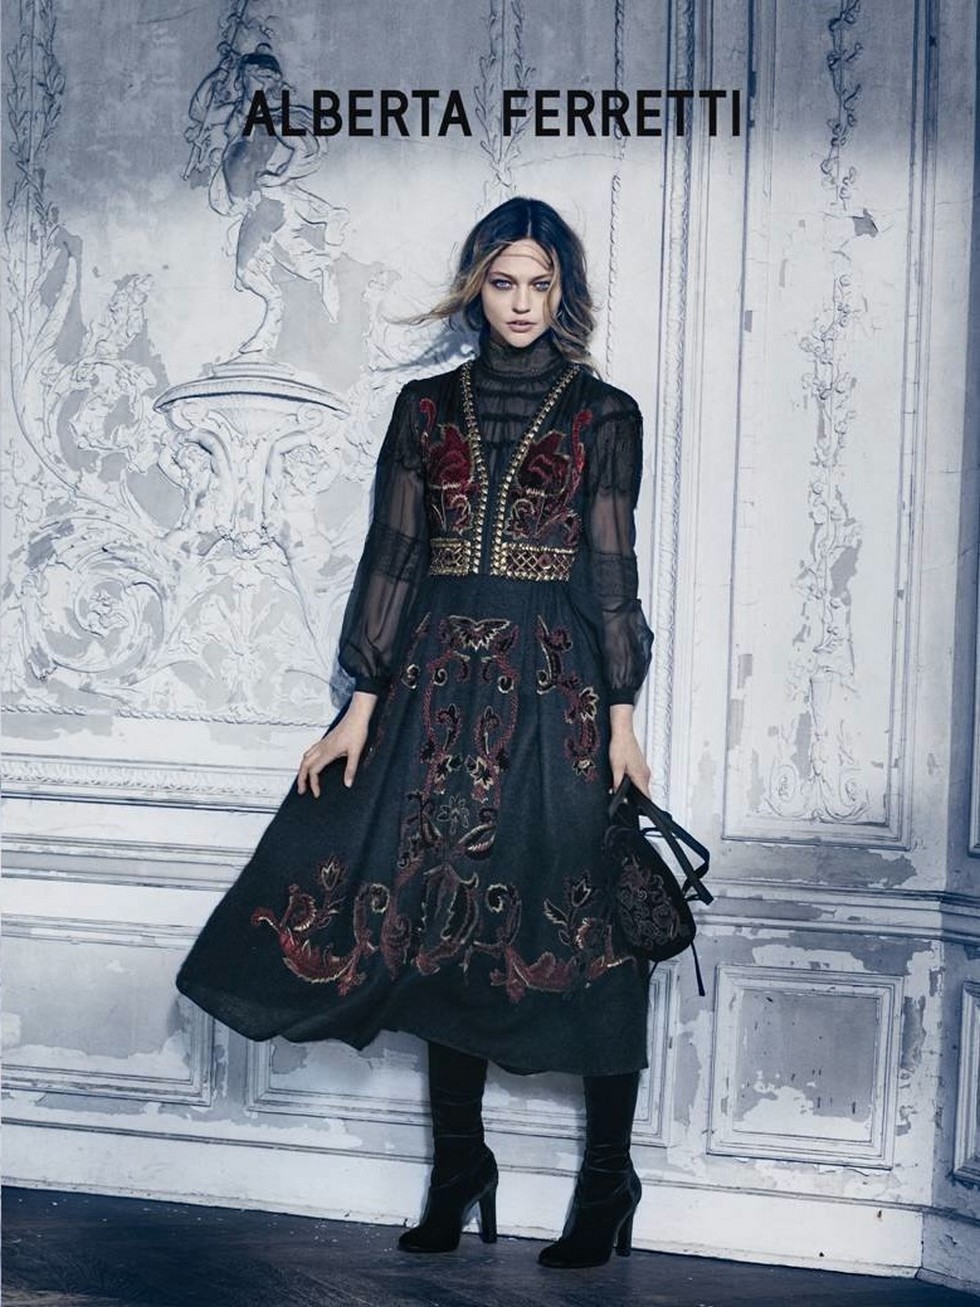 Italian Fashion Sasha Pivovarova fairy tale in Alberta Ferretti Fall-Winter 2015 ads-alberta ferretti fall 2015 05 (1)